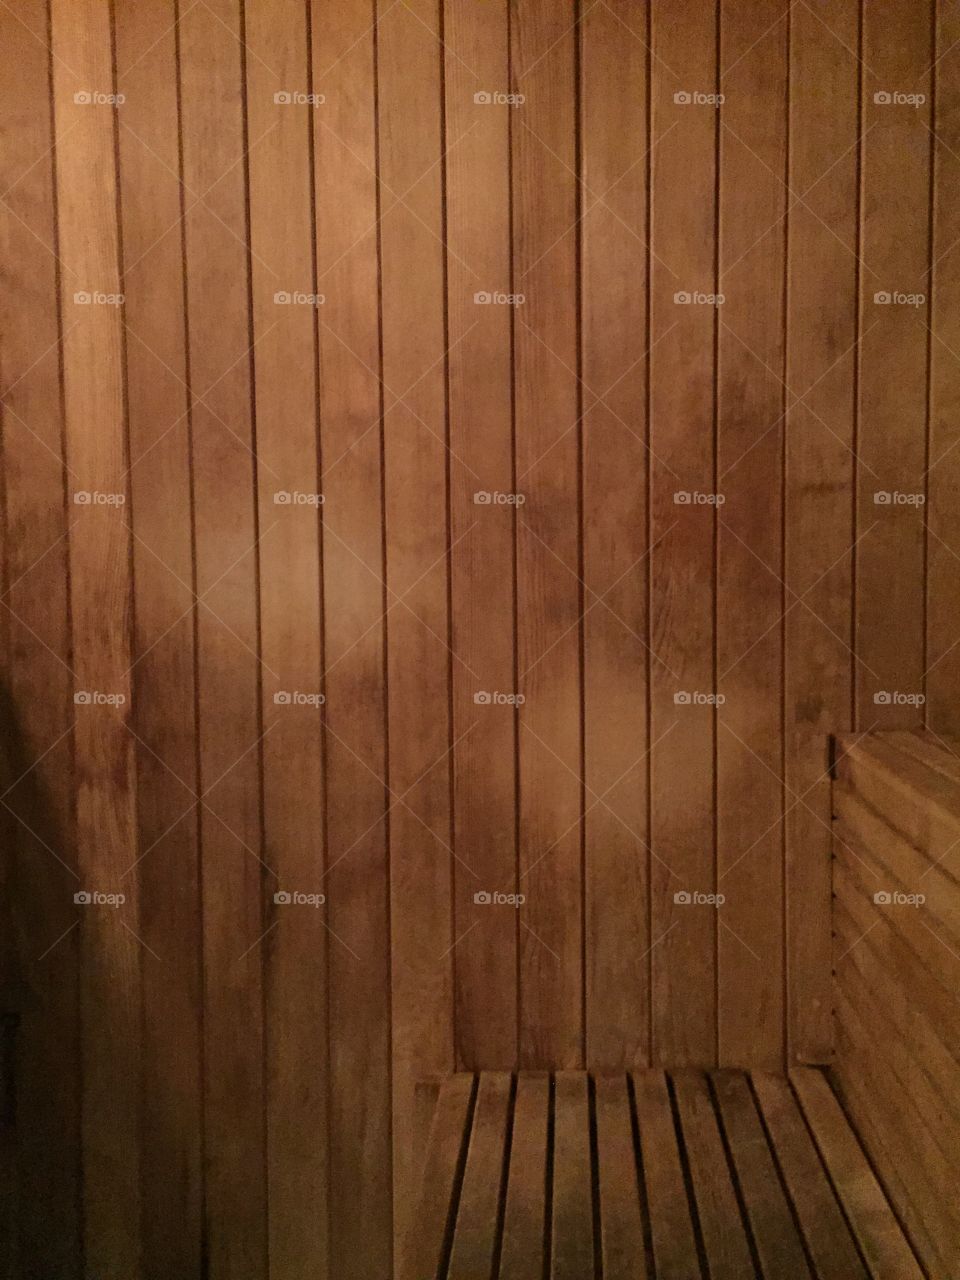 Wooden wall of a sauna